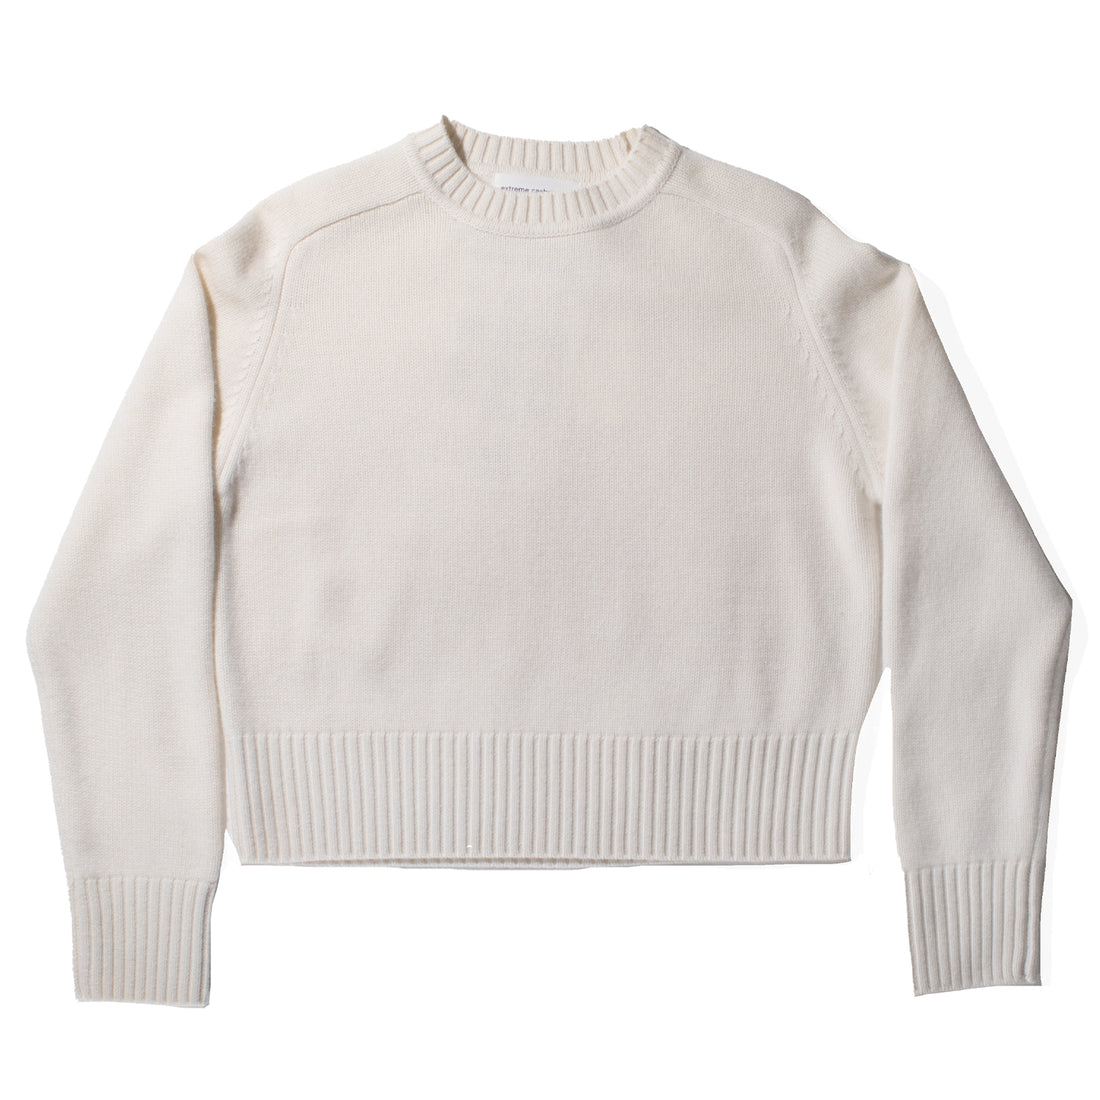 Extreme Cashmere Please Sweater in Cream